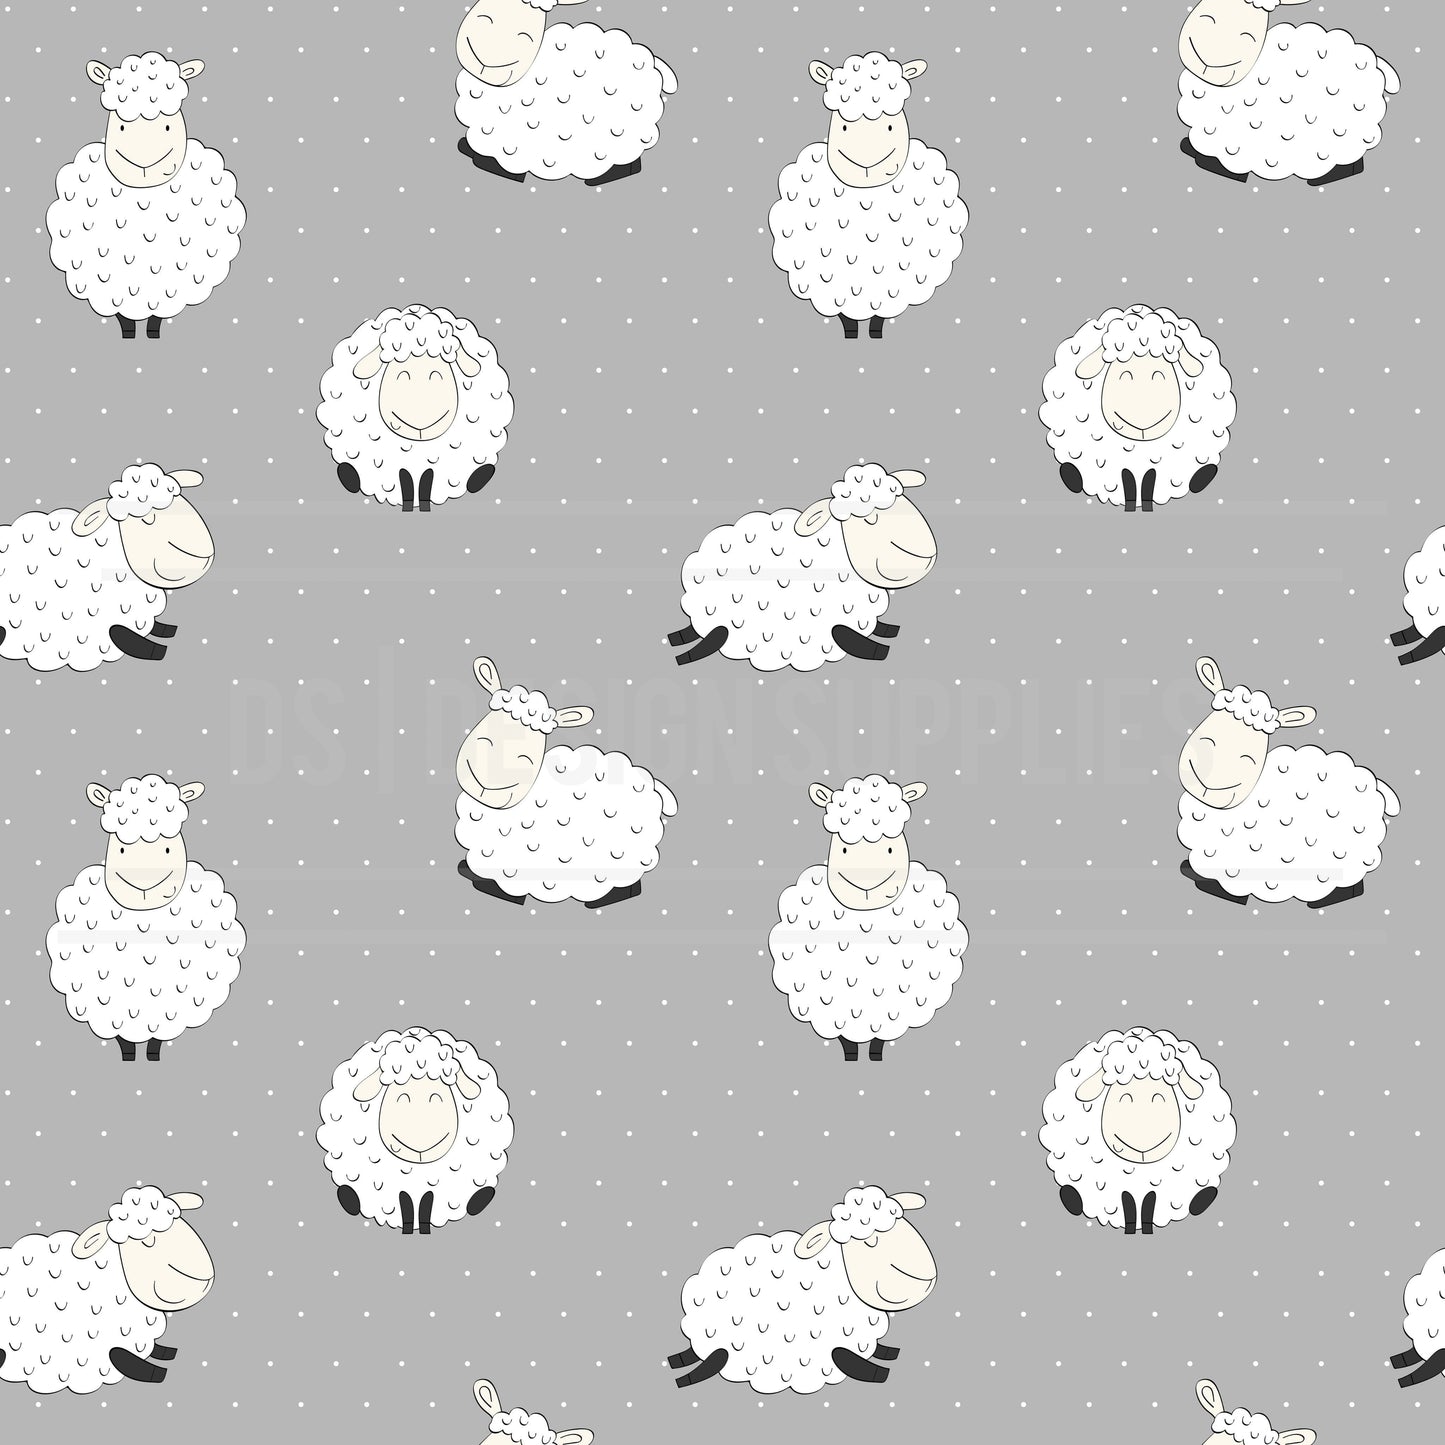 Sheep on Grey